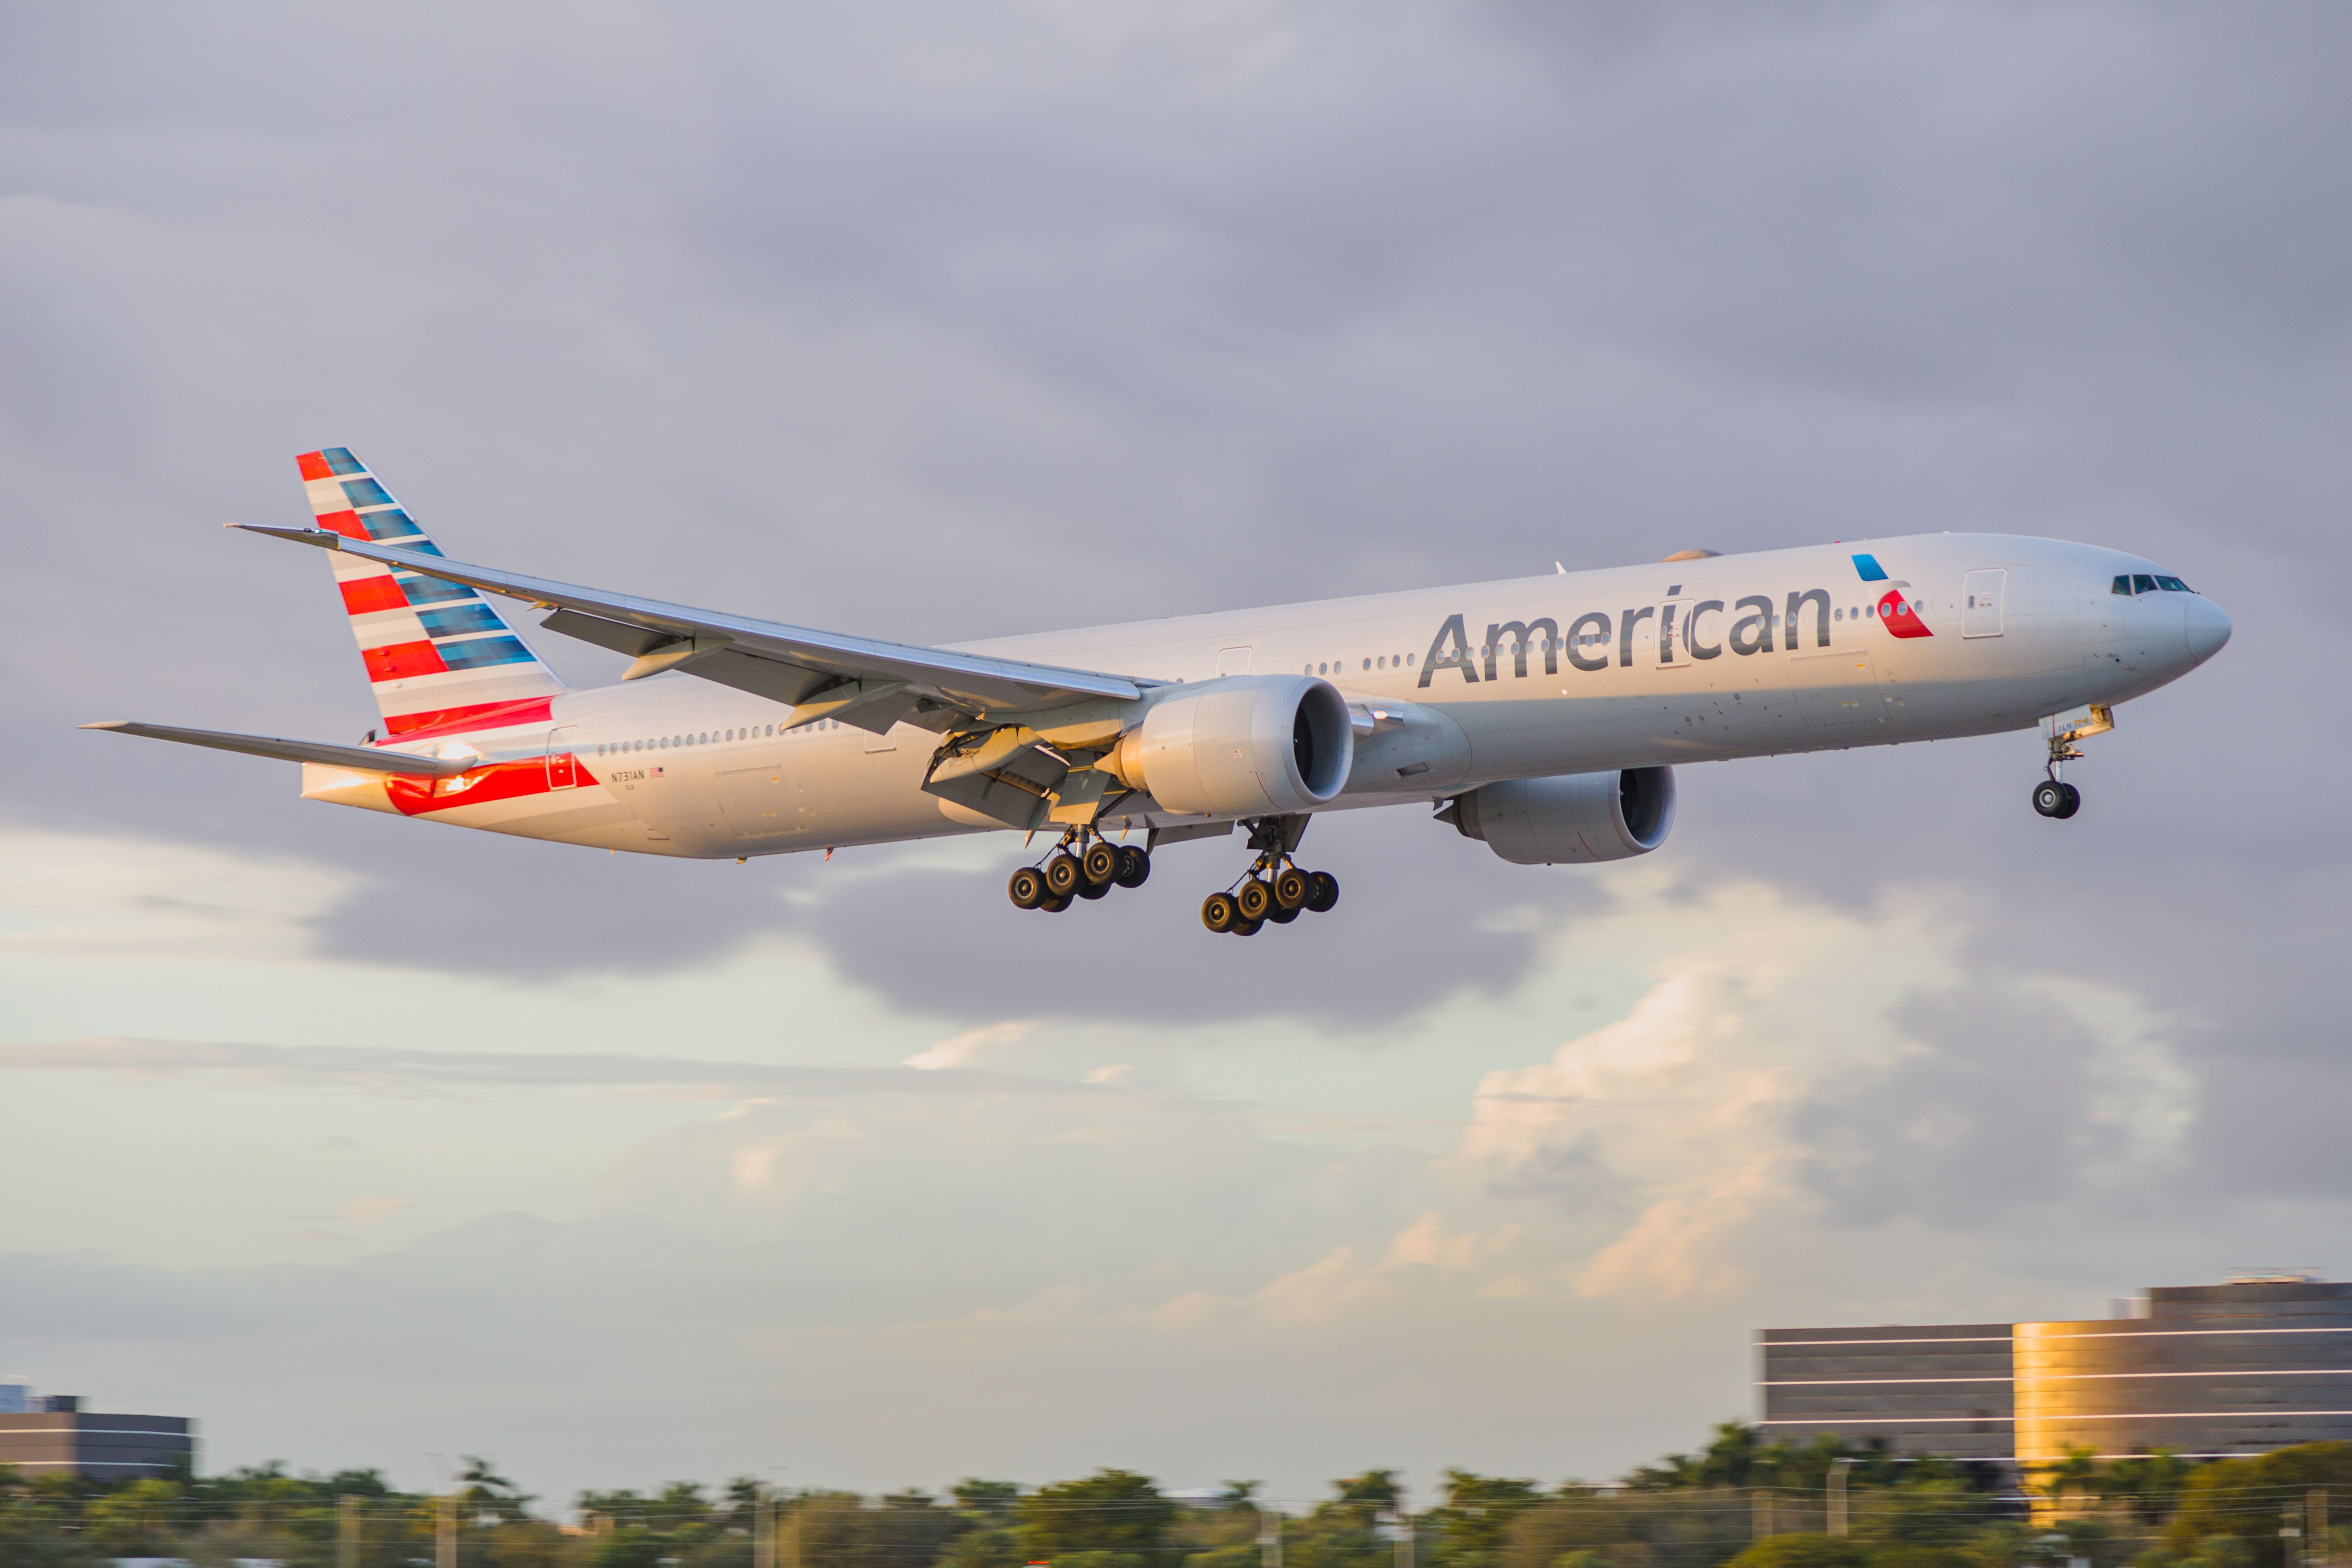 American Airlines Boeing 777-300ER landing at Miami International Airport.